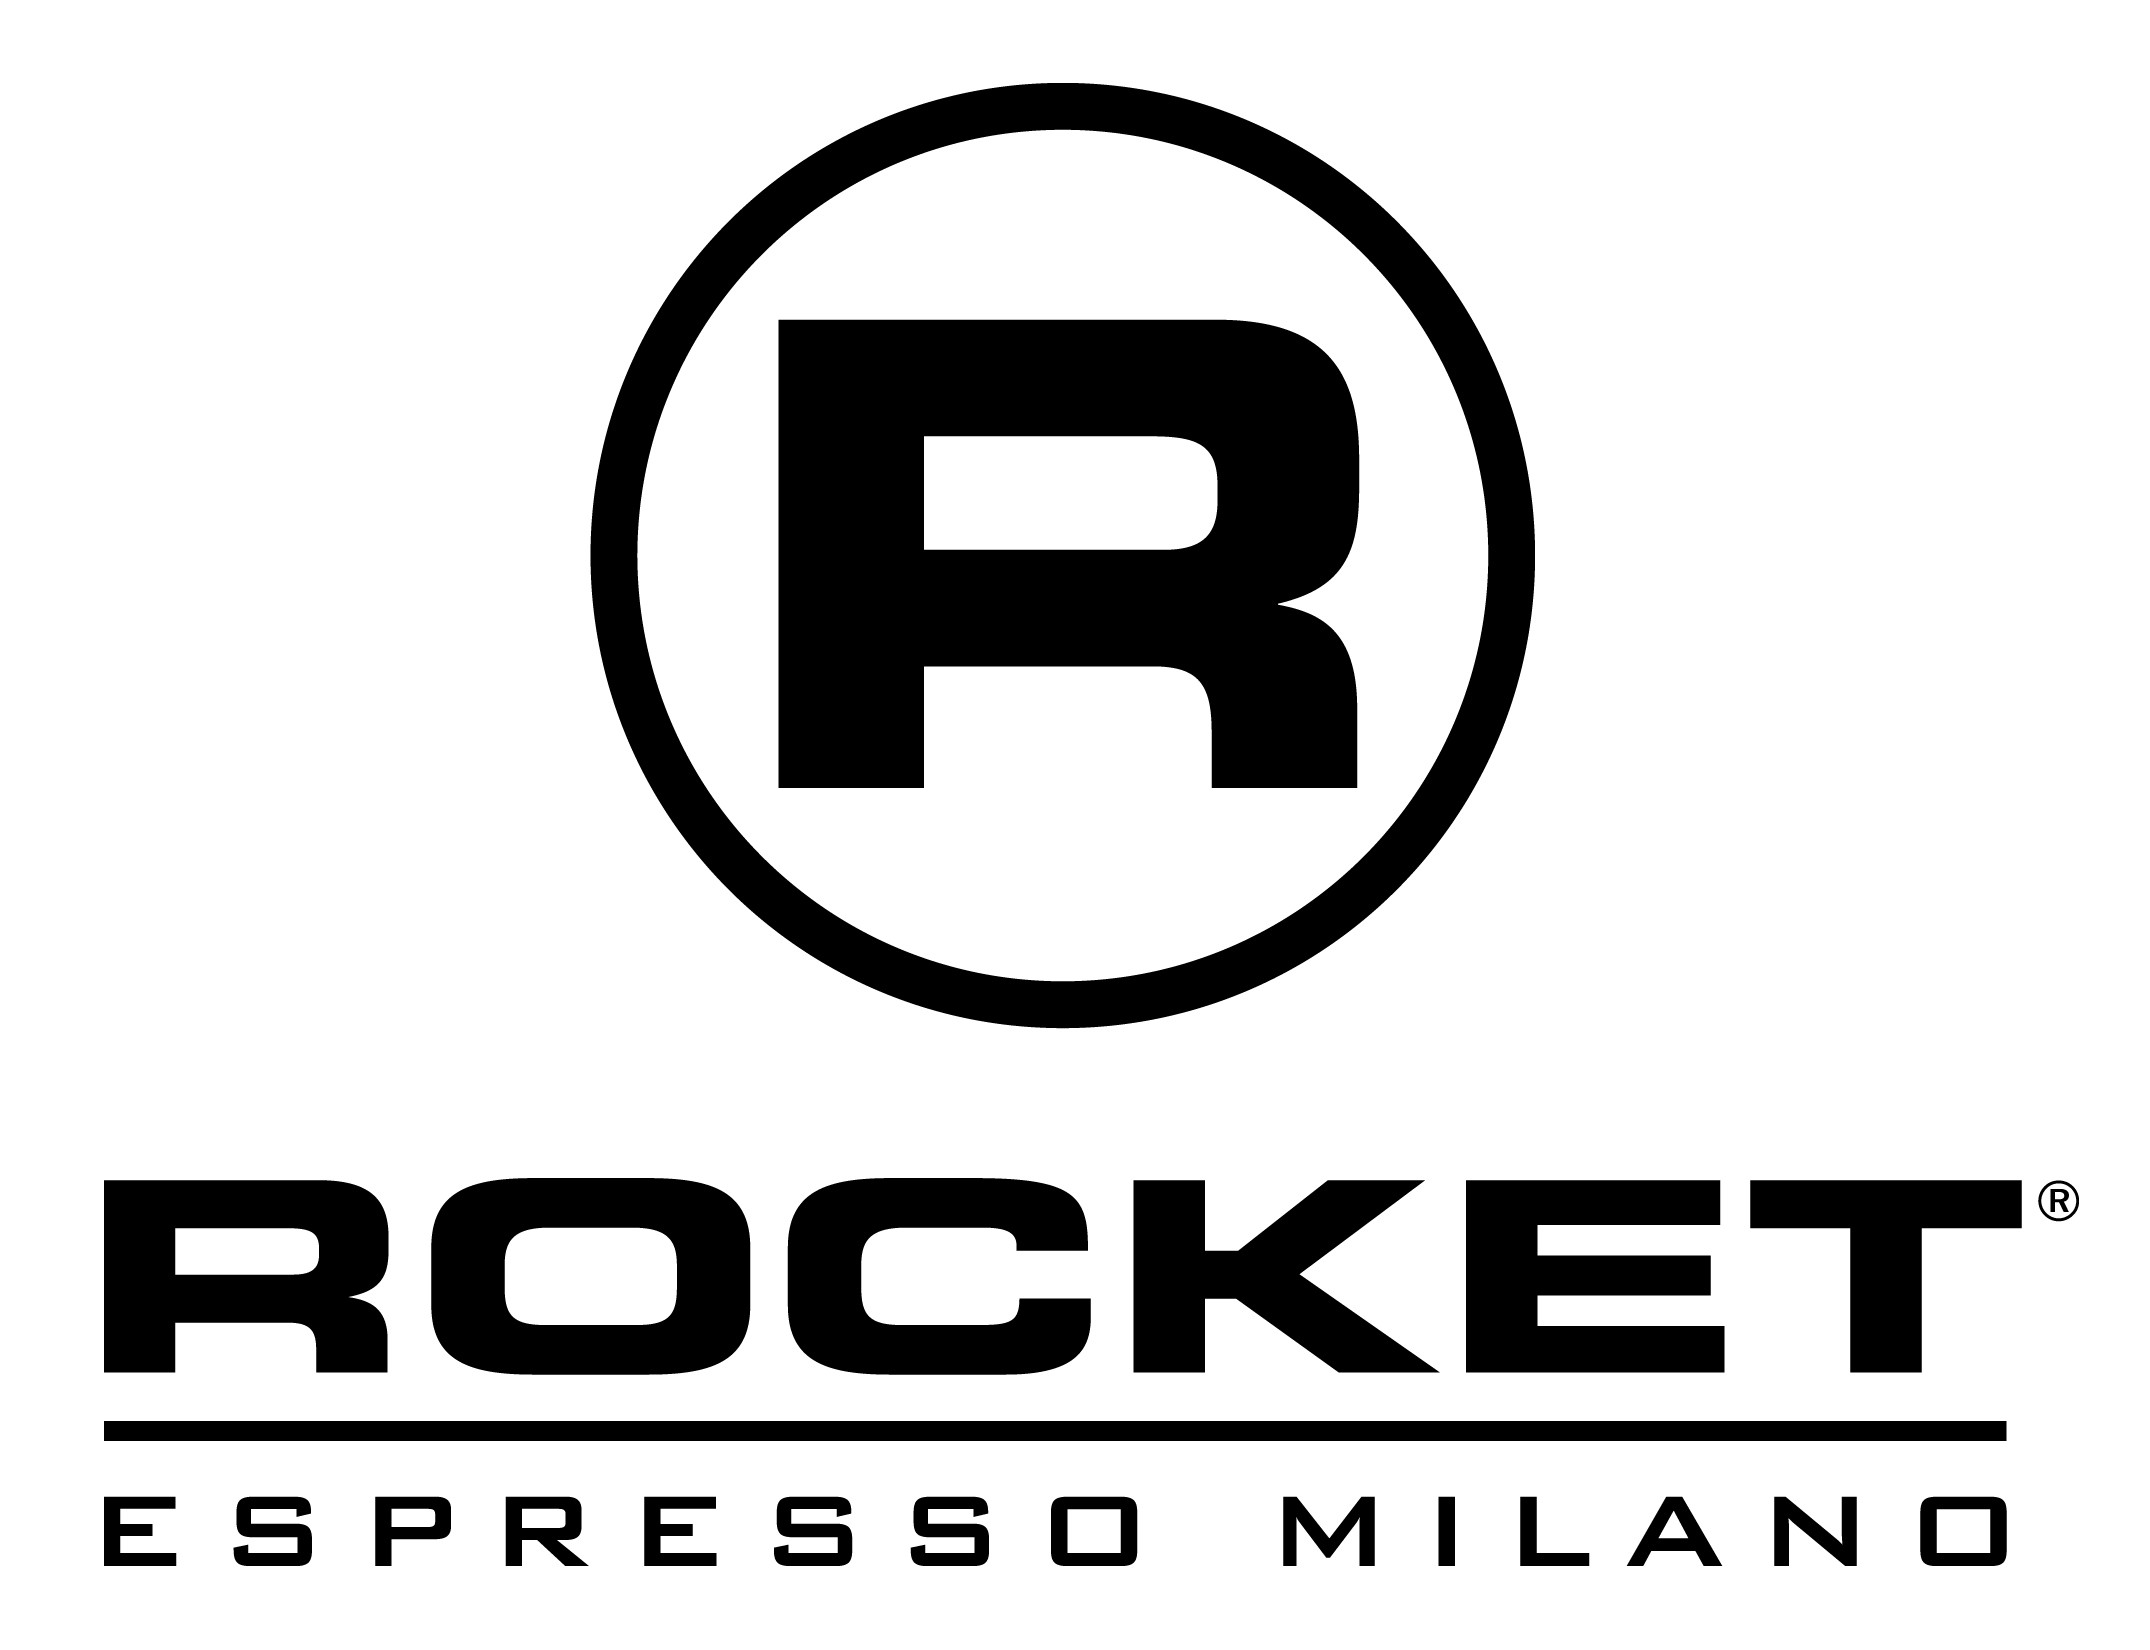 Rocket Porta Via Espresso Machine